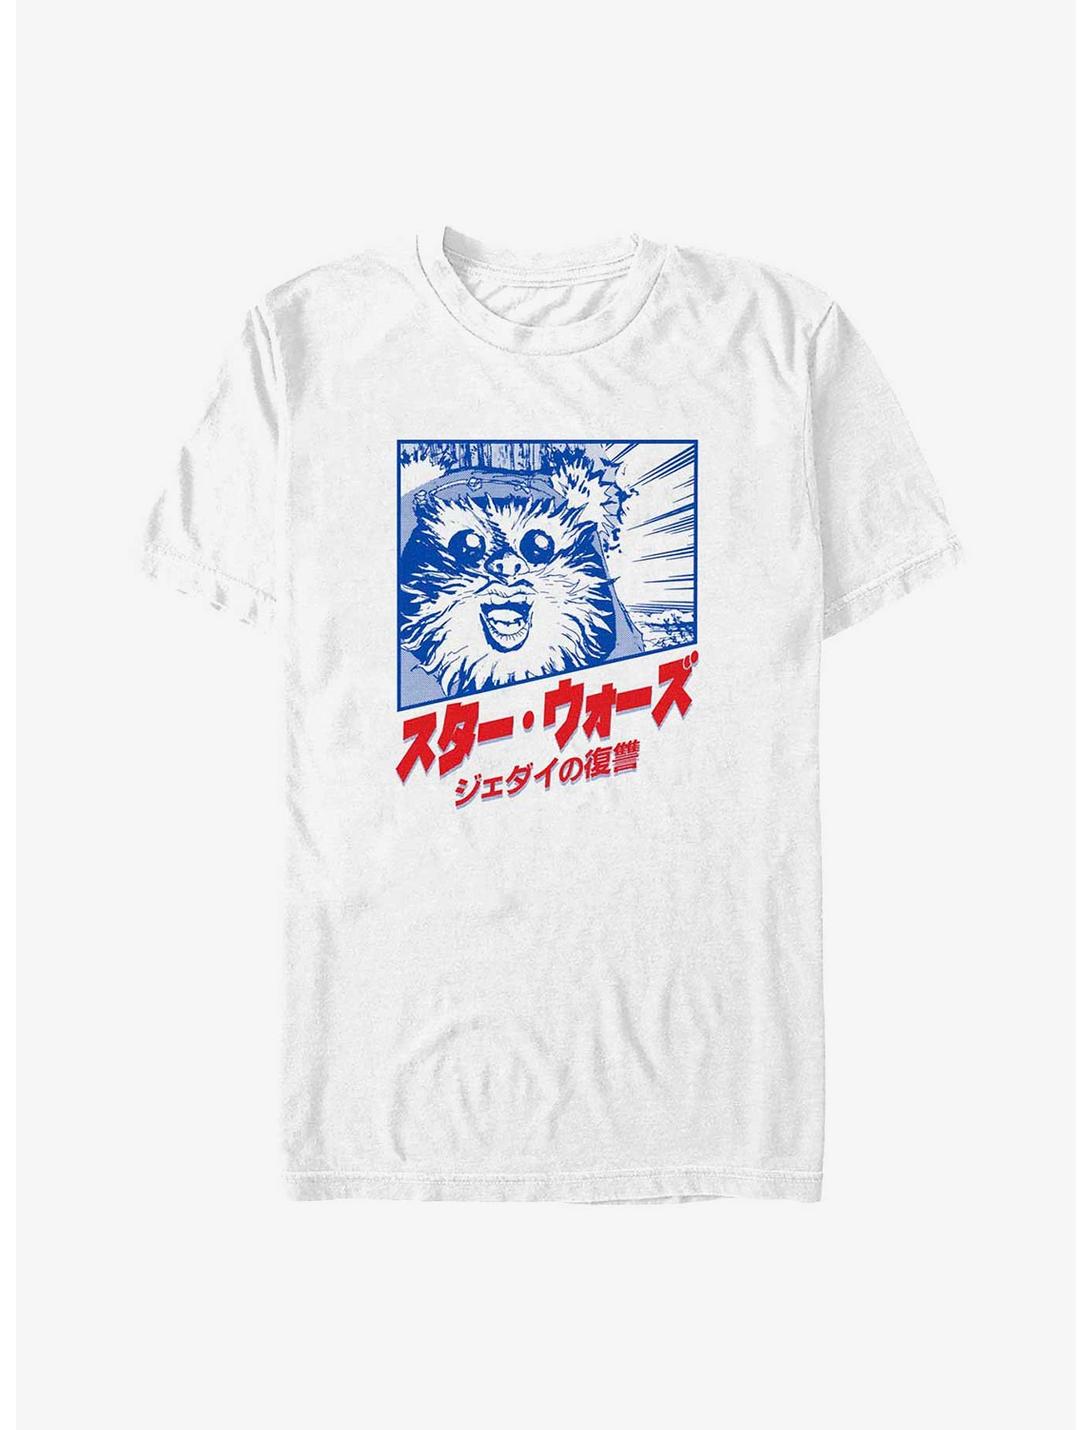 Star Wars Ewok Revenge of the Jedi in Japanese T-Shirt, WHITE, hi-res